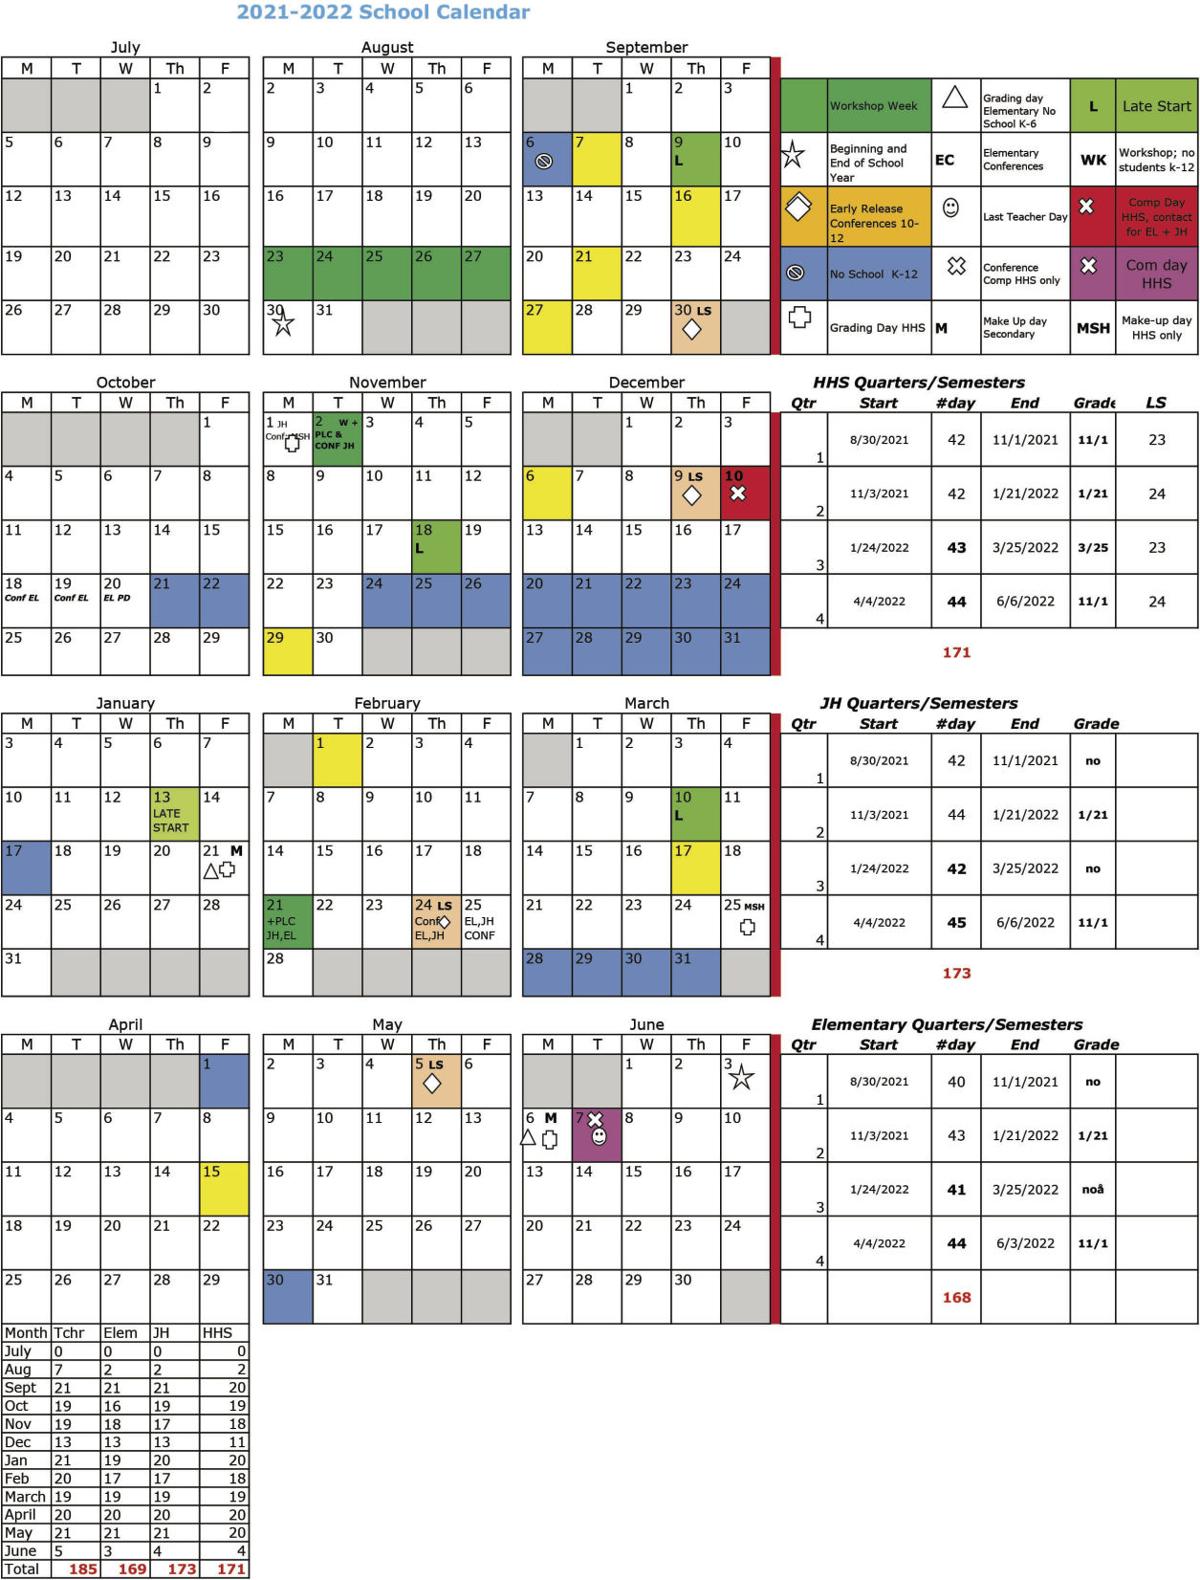 gonzaga academic calendar 2021 2022 Hopkins School Board Approves 2020 21 And 2021 22 Calendars Hopkins Hometownsource Com gonzaga academic calendar 2021 2022